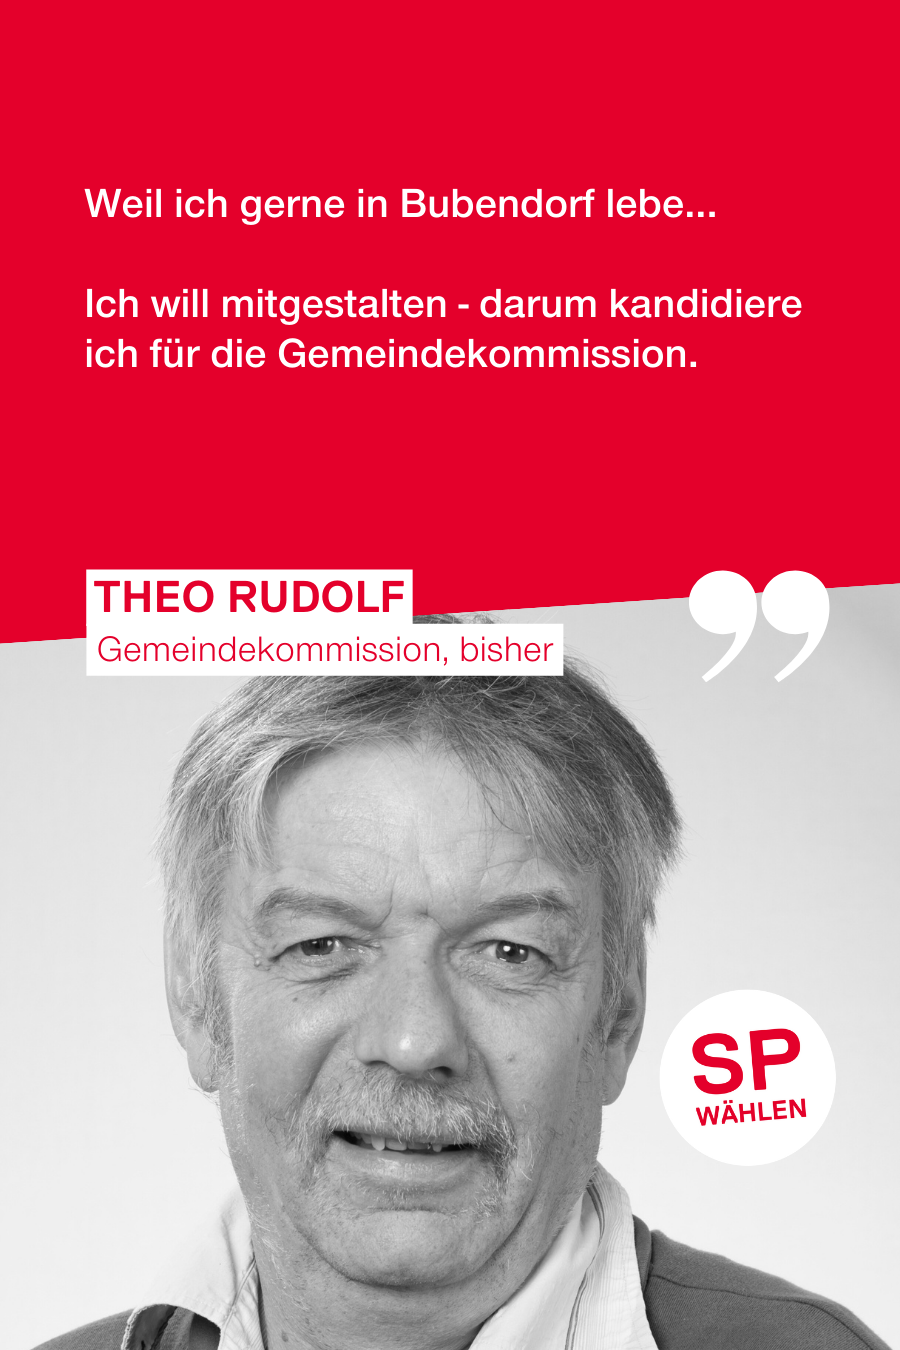 Theodor Rudolf